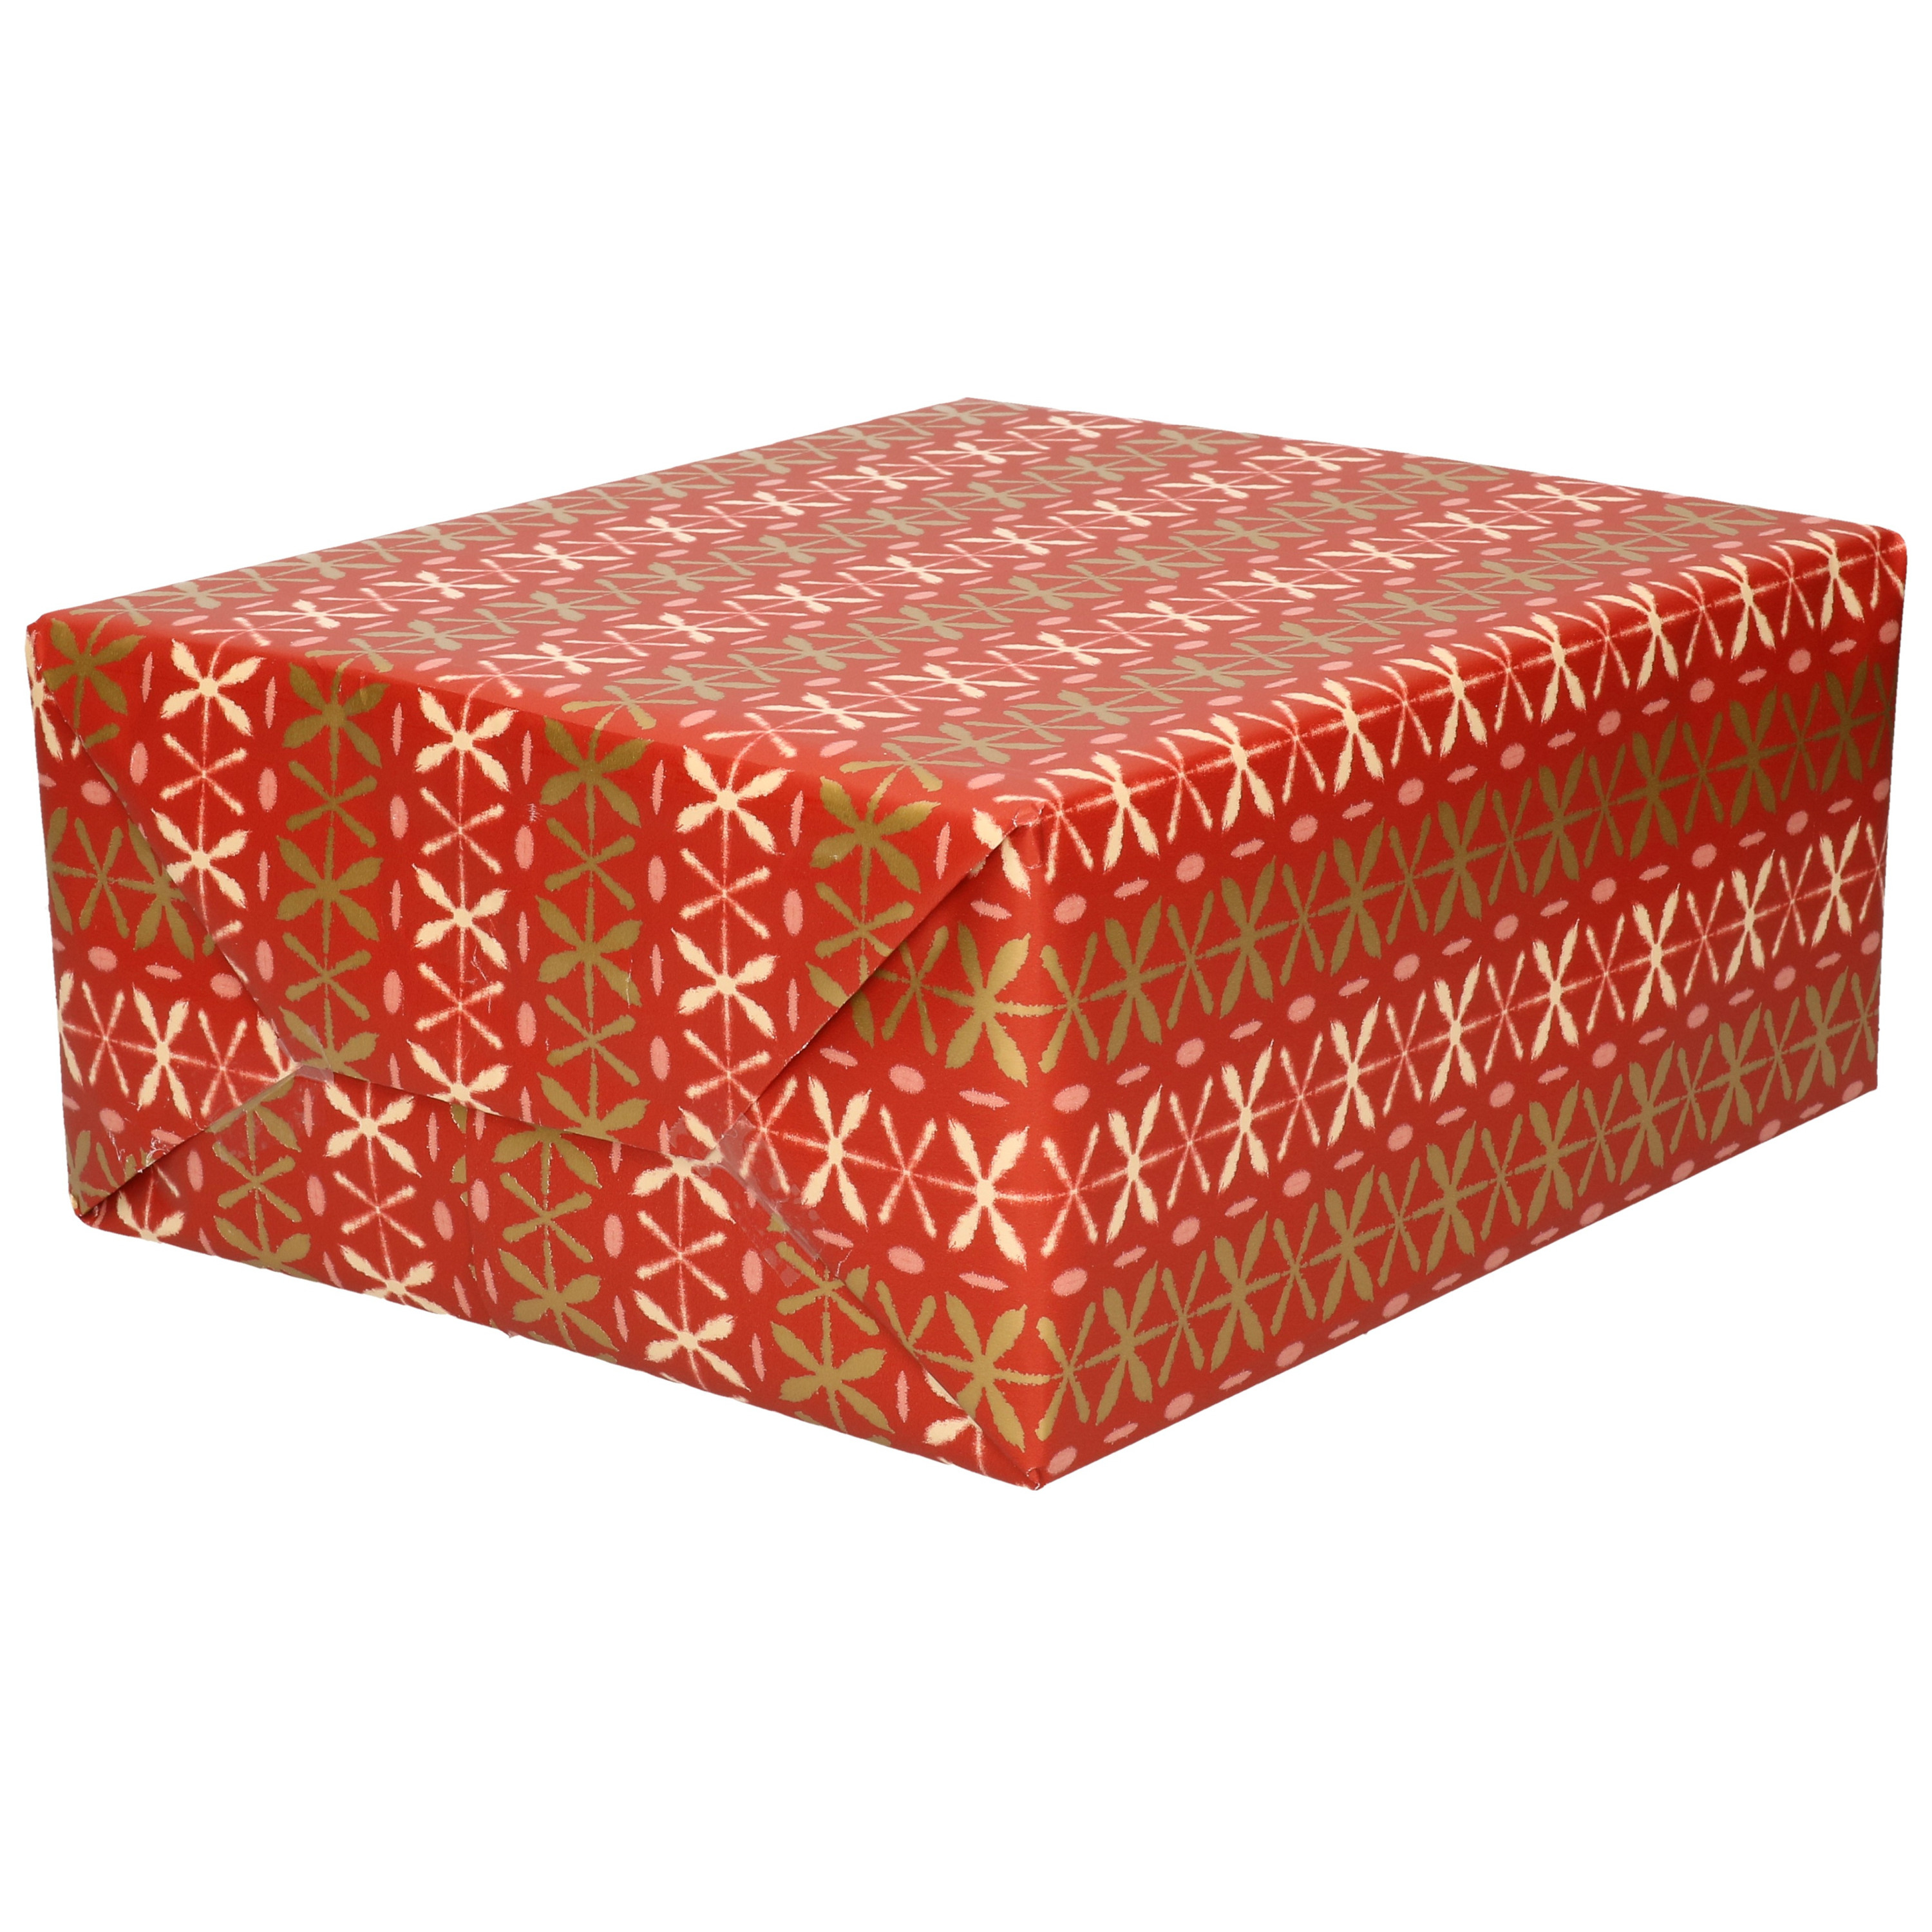 Inpakpapier/cadeaupapier - rood - roze/gouden kruisjes - 200 x 70 cm